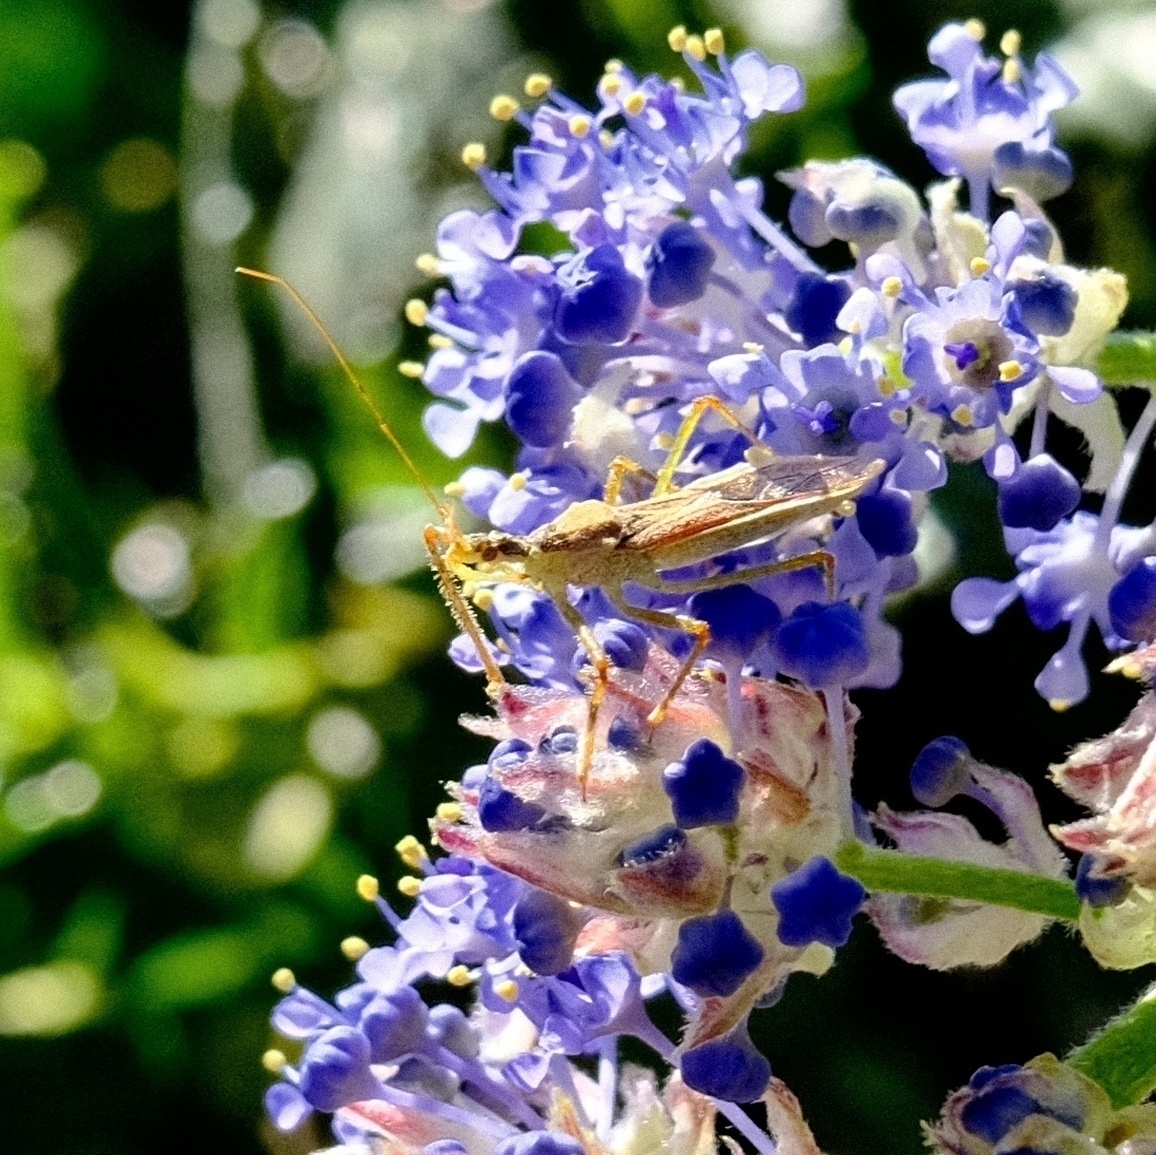 assassin bug atop purple Ceanothus flowers